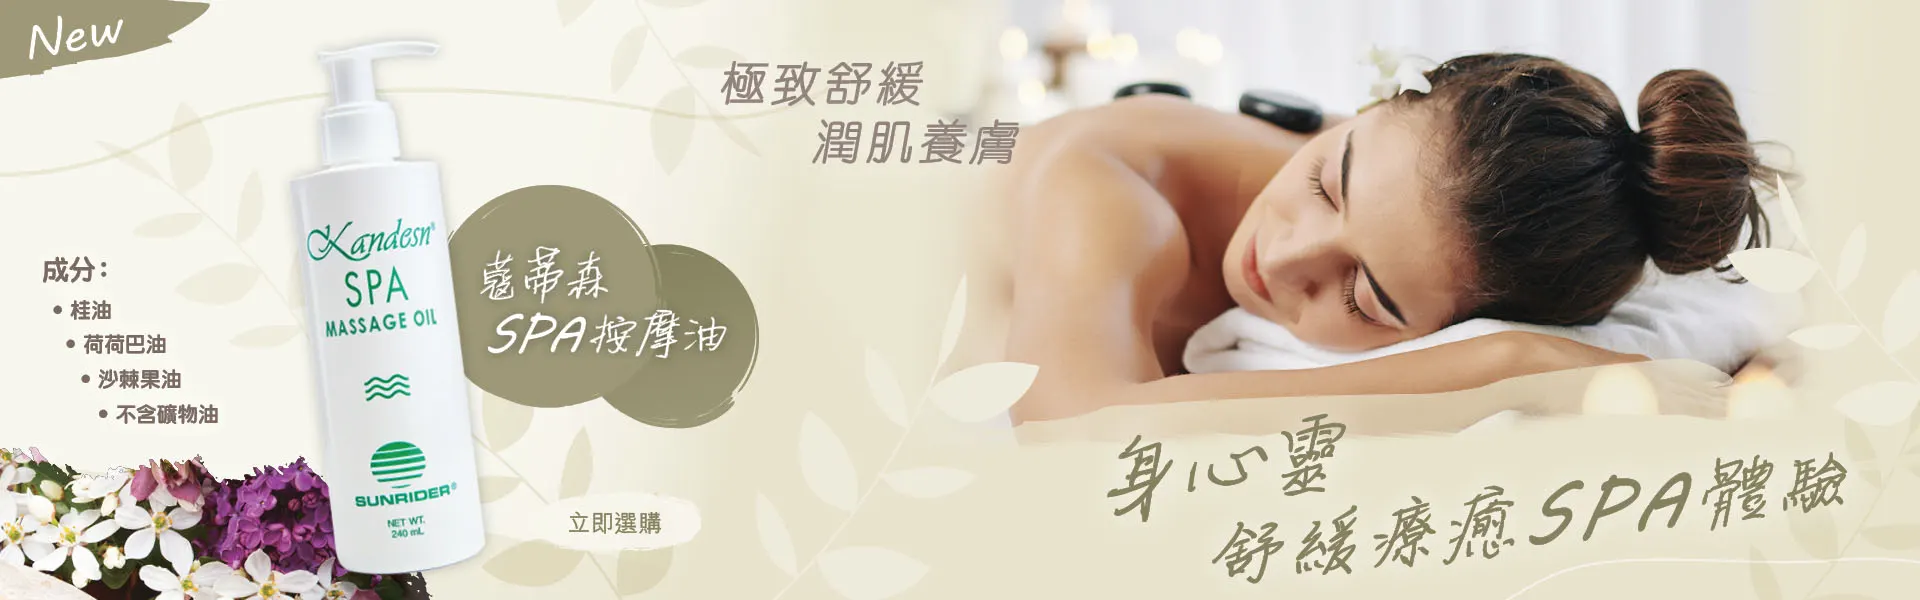 [HK] SPA Massage Oil banner